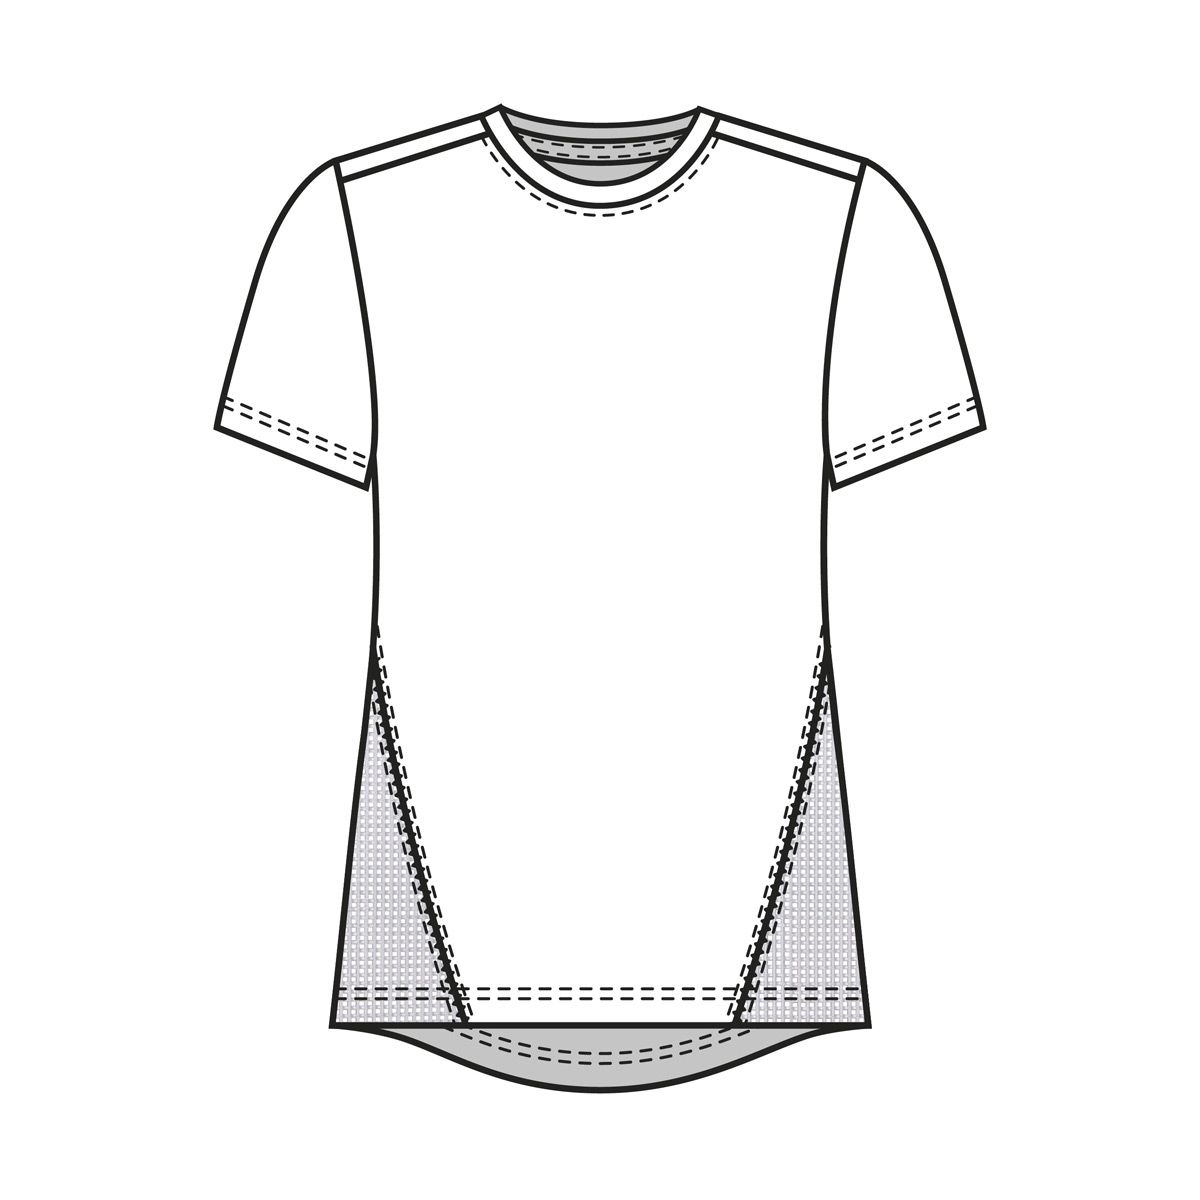 Molde Camiseta Esportiva com Microfuros - Feminino